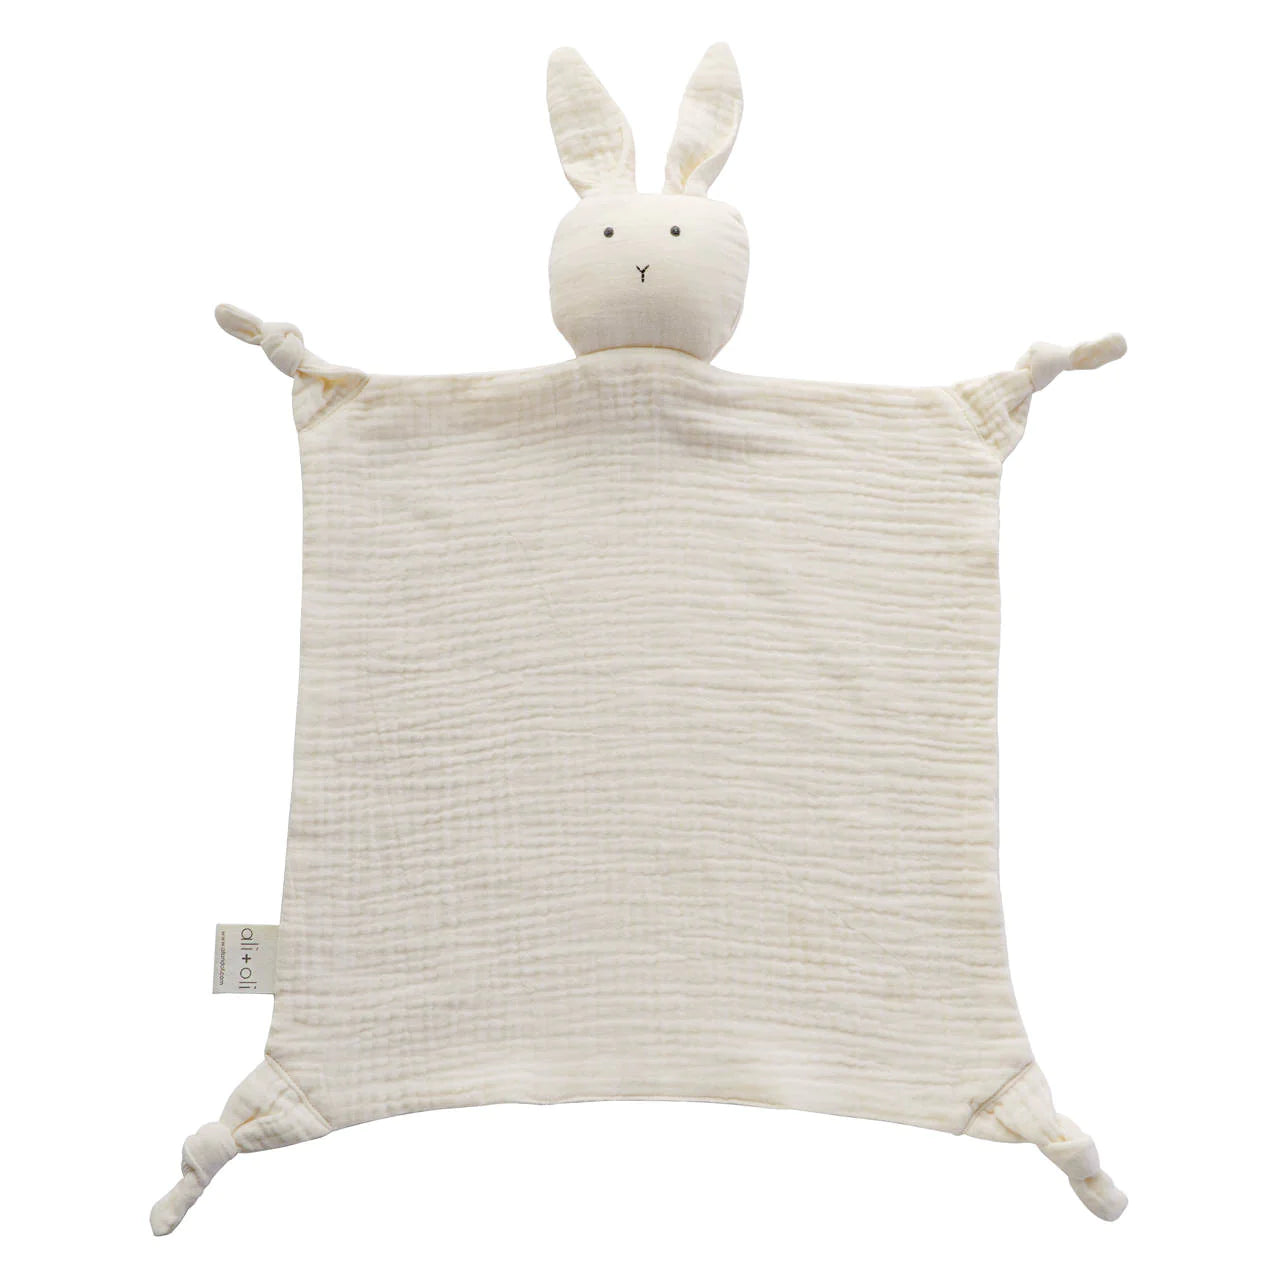 Cuddle Bunny Security Blanket Soft Muslin Cotton